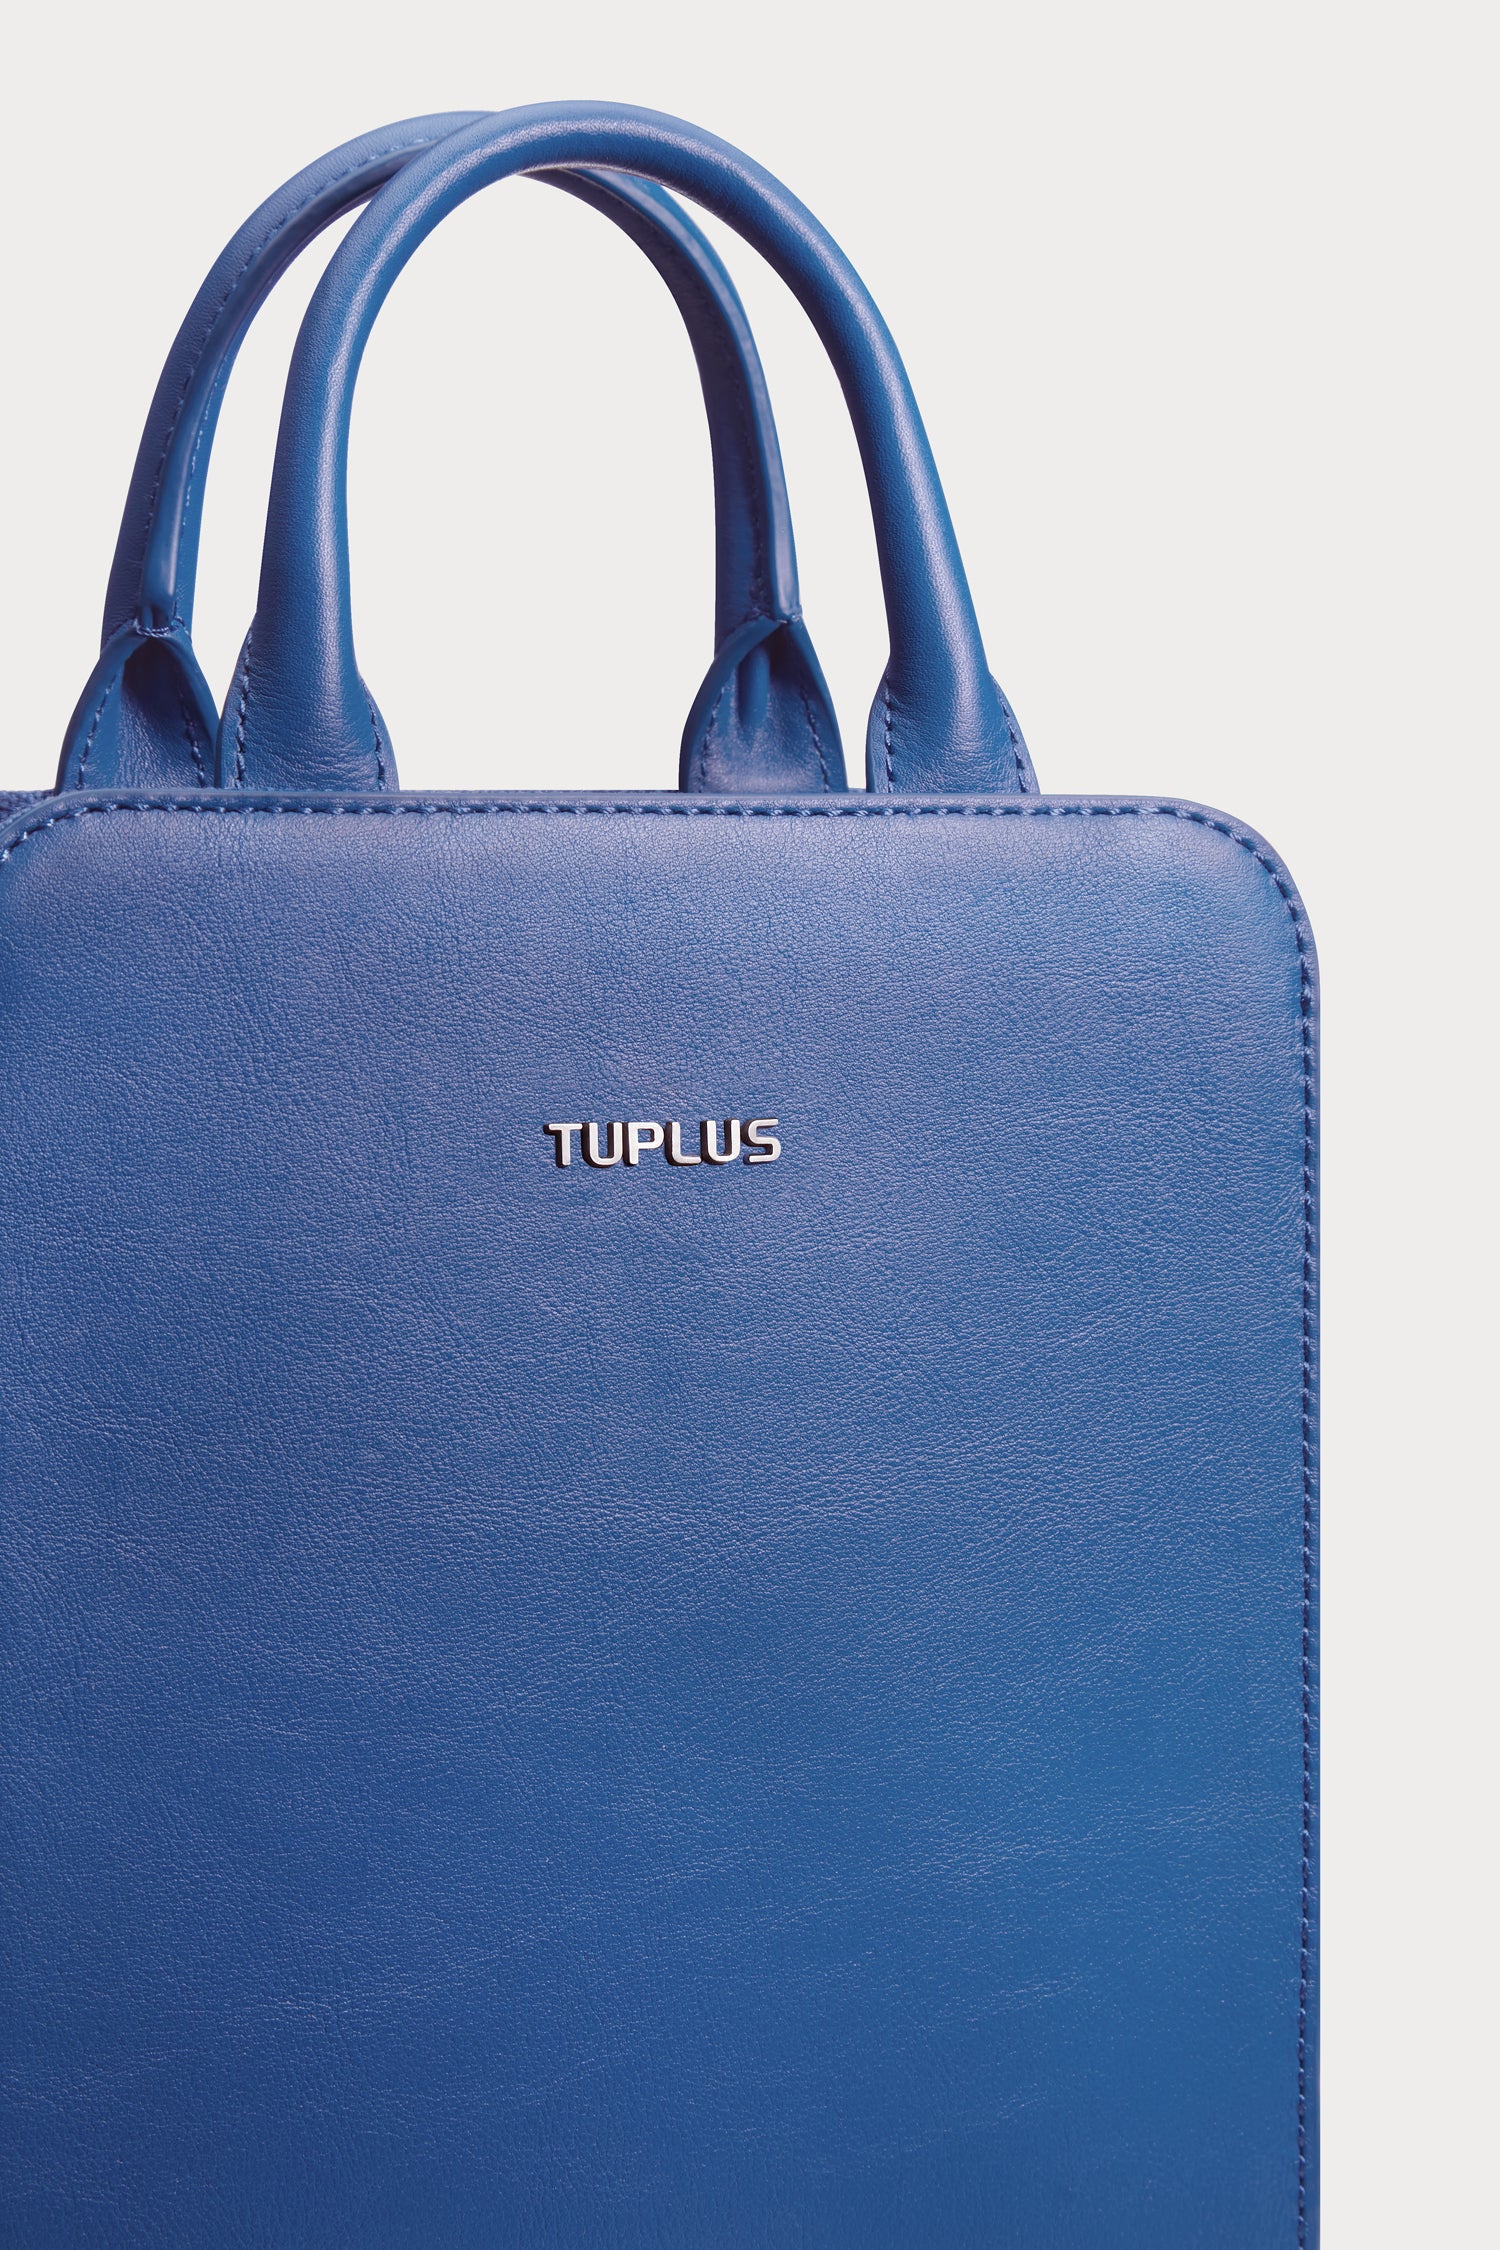 TUPLUS Urban Chic Commuter Crossbody Bag*